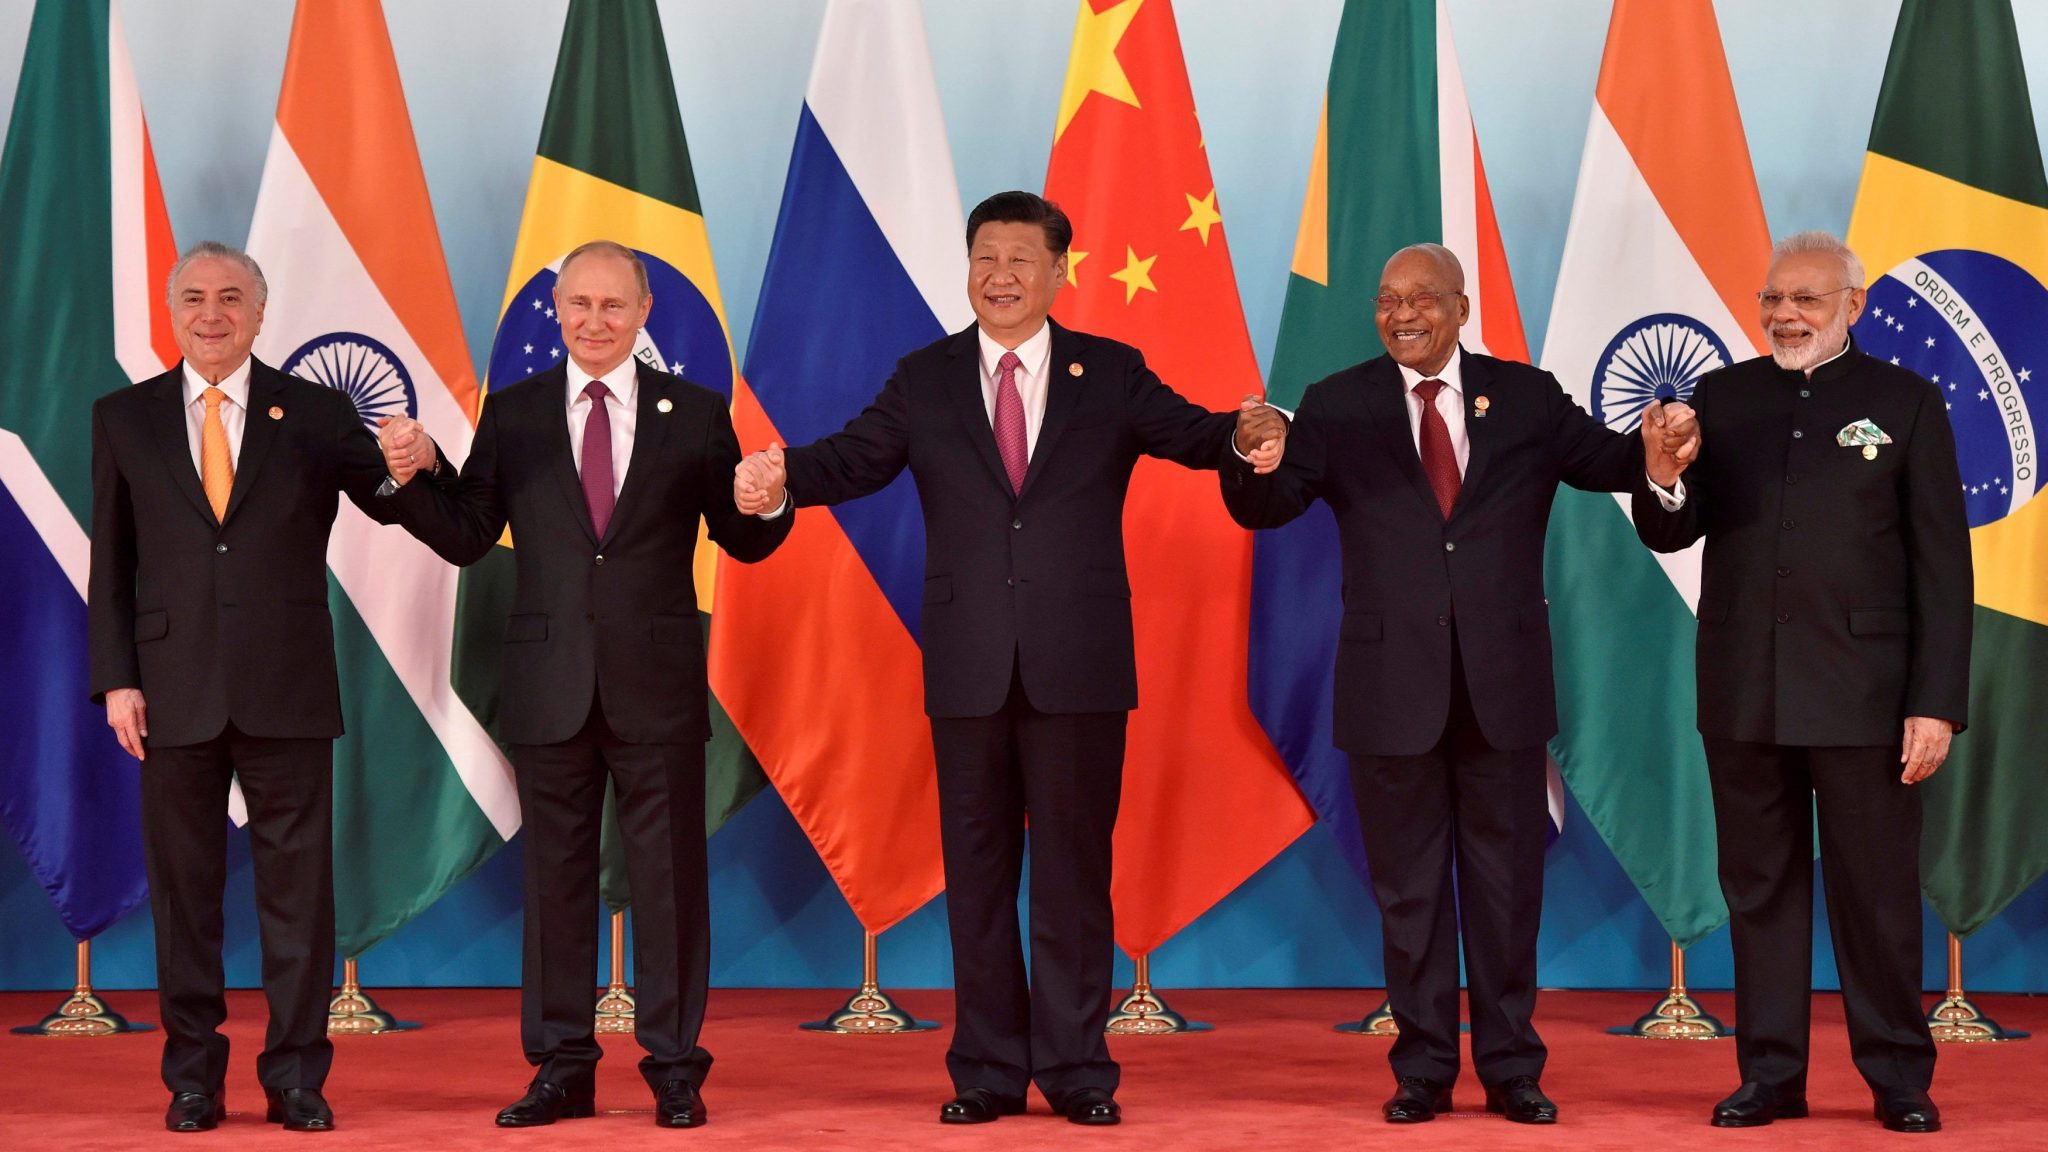 BRICS Summit 2018 sends an empowering message for a better world